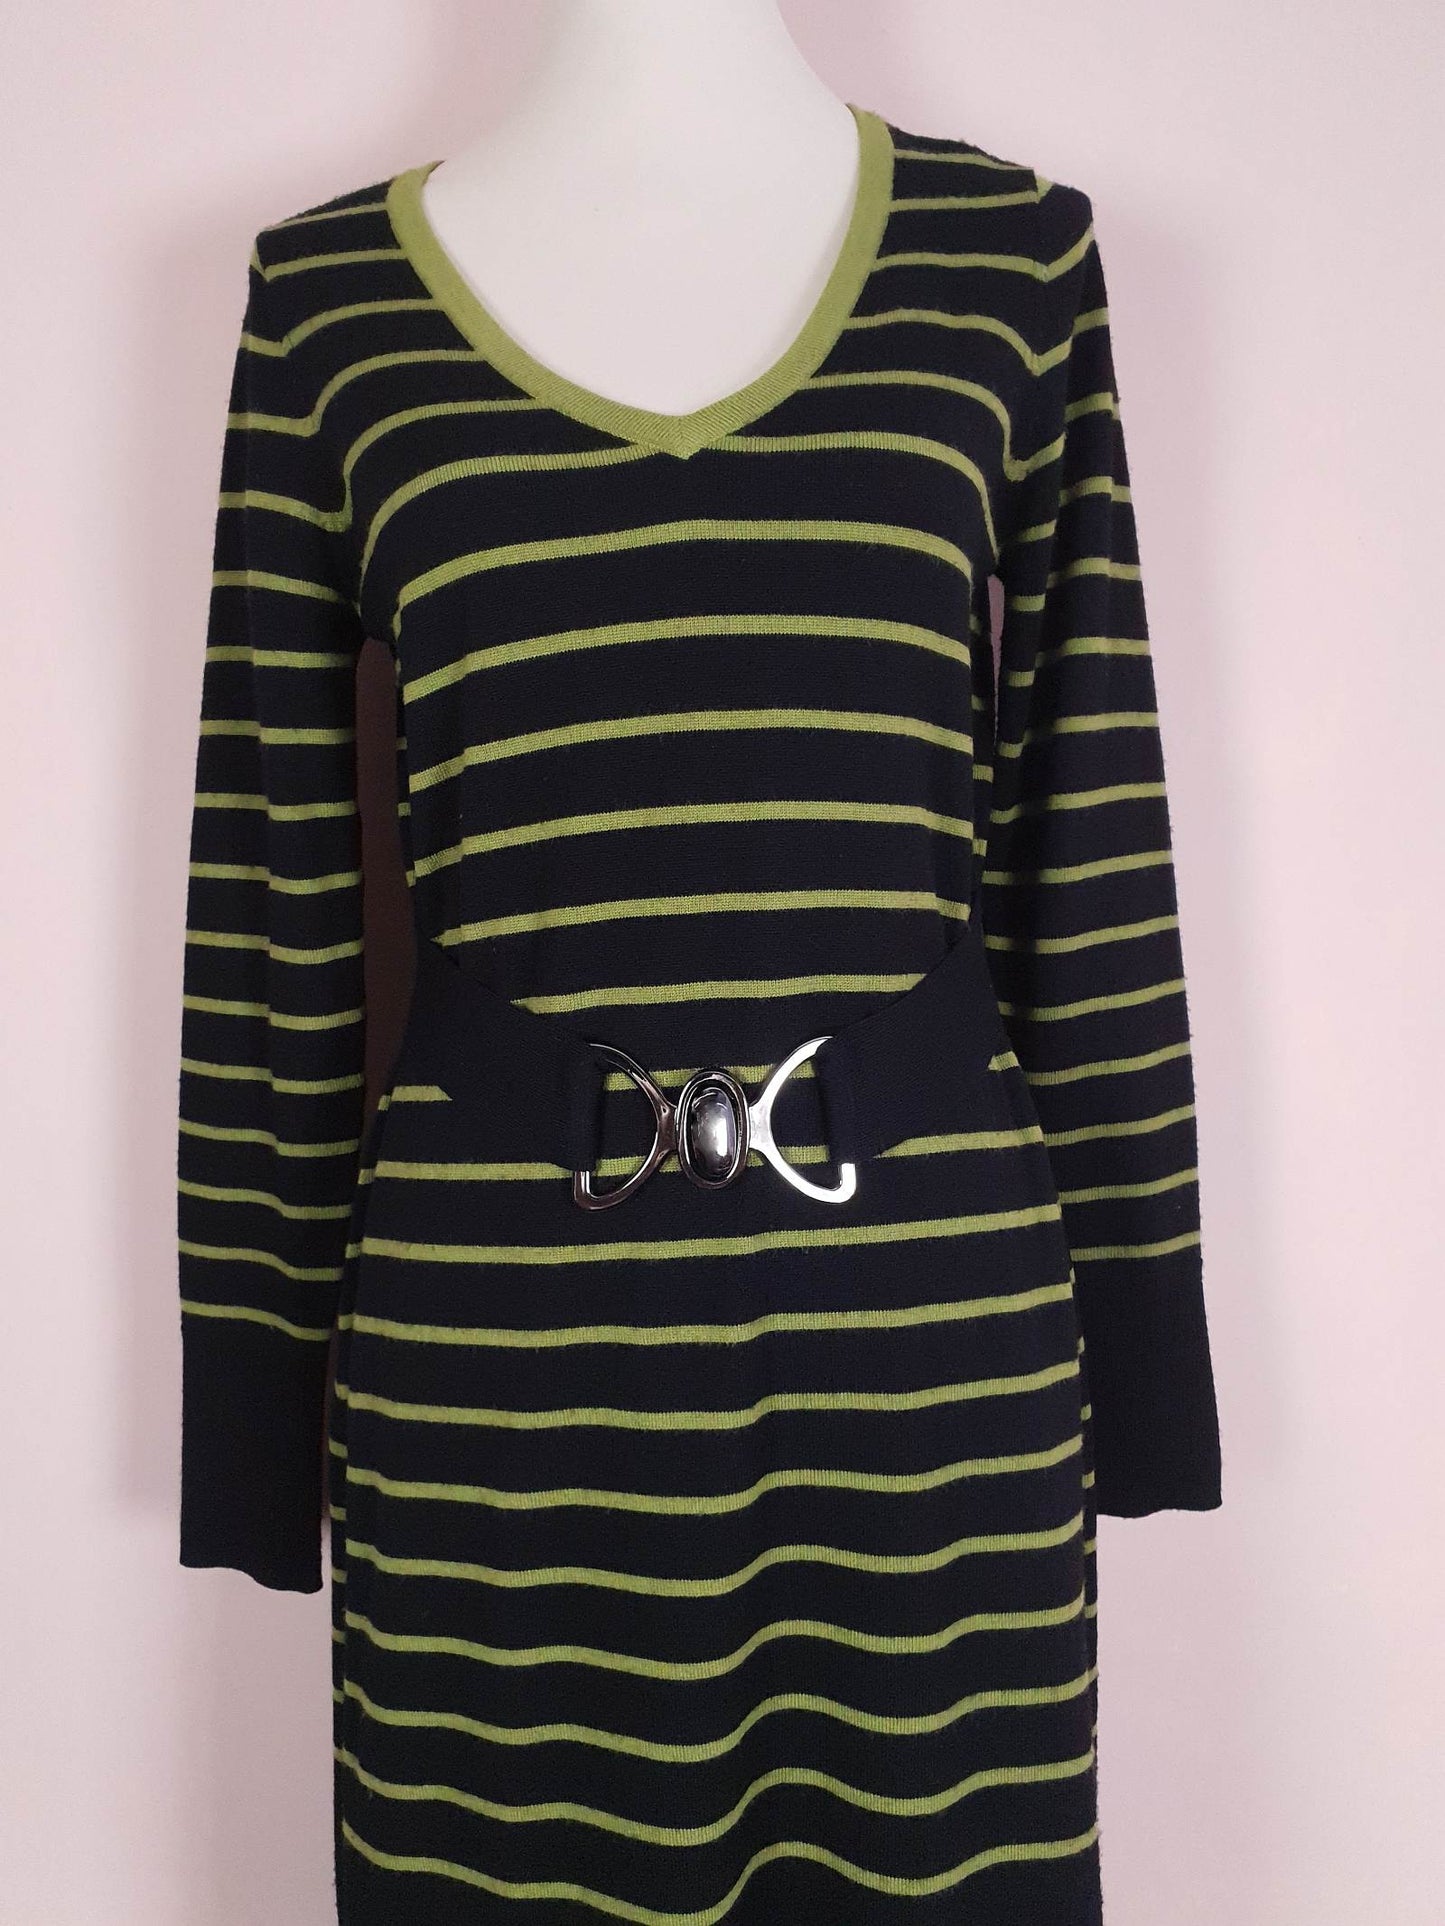 Vintage Laura Ashley Merino Wool Dress Midi Striped Black Green Size 12